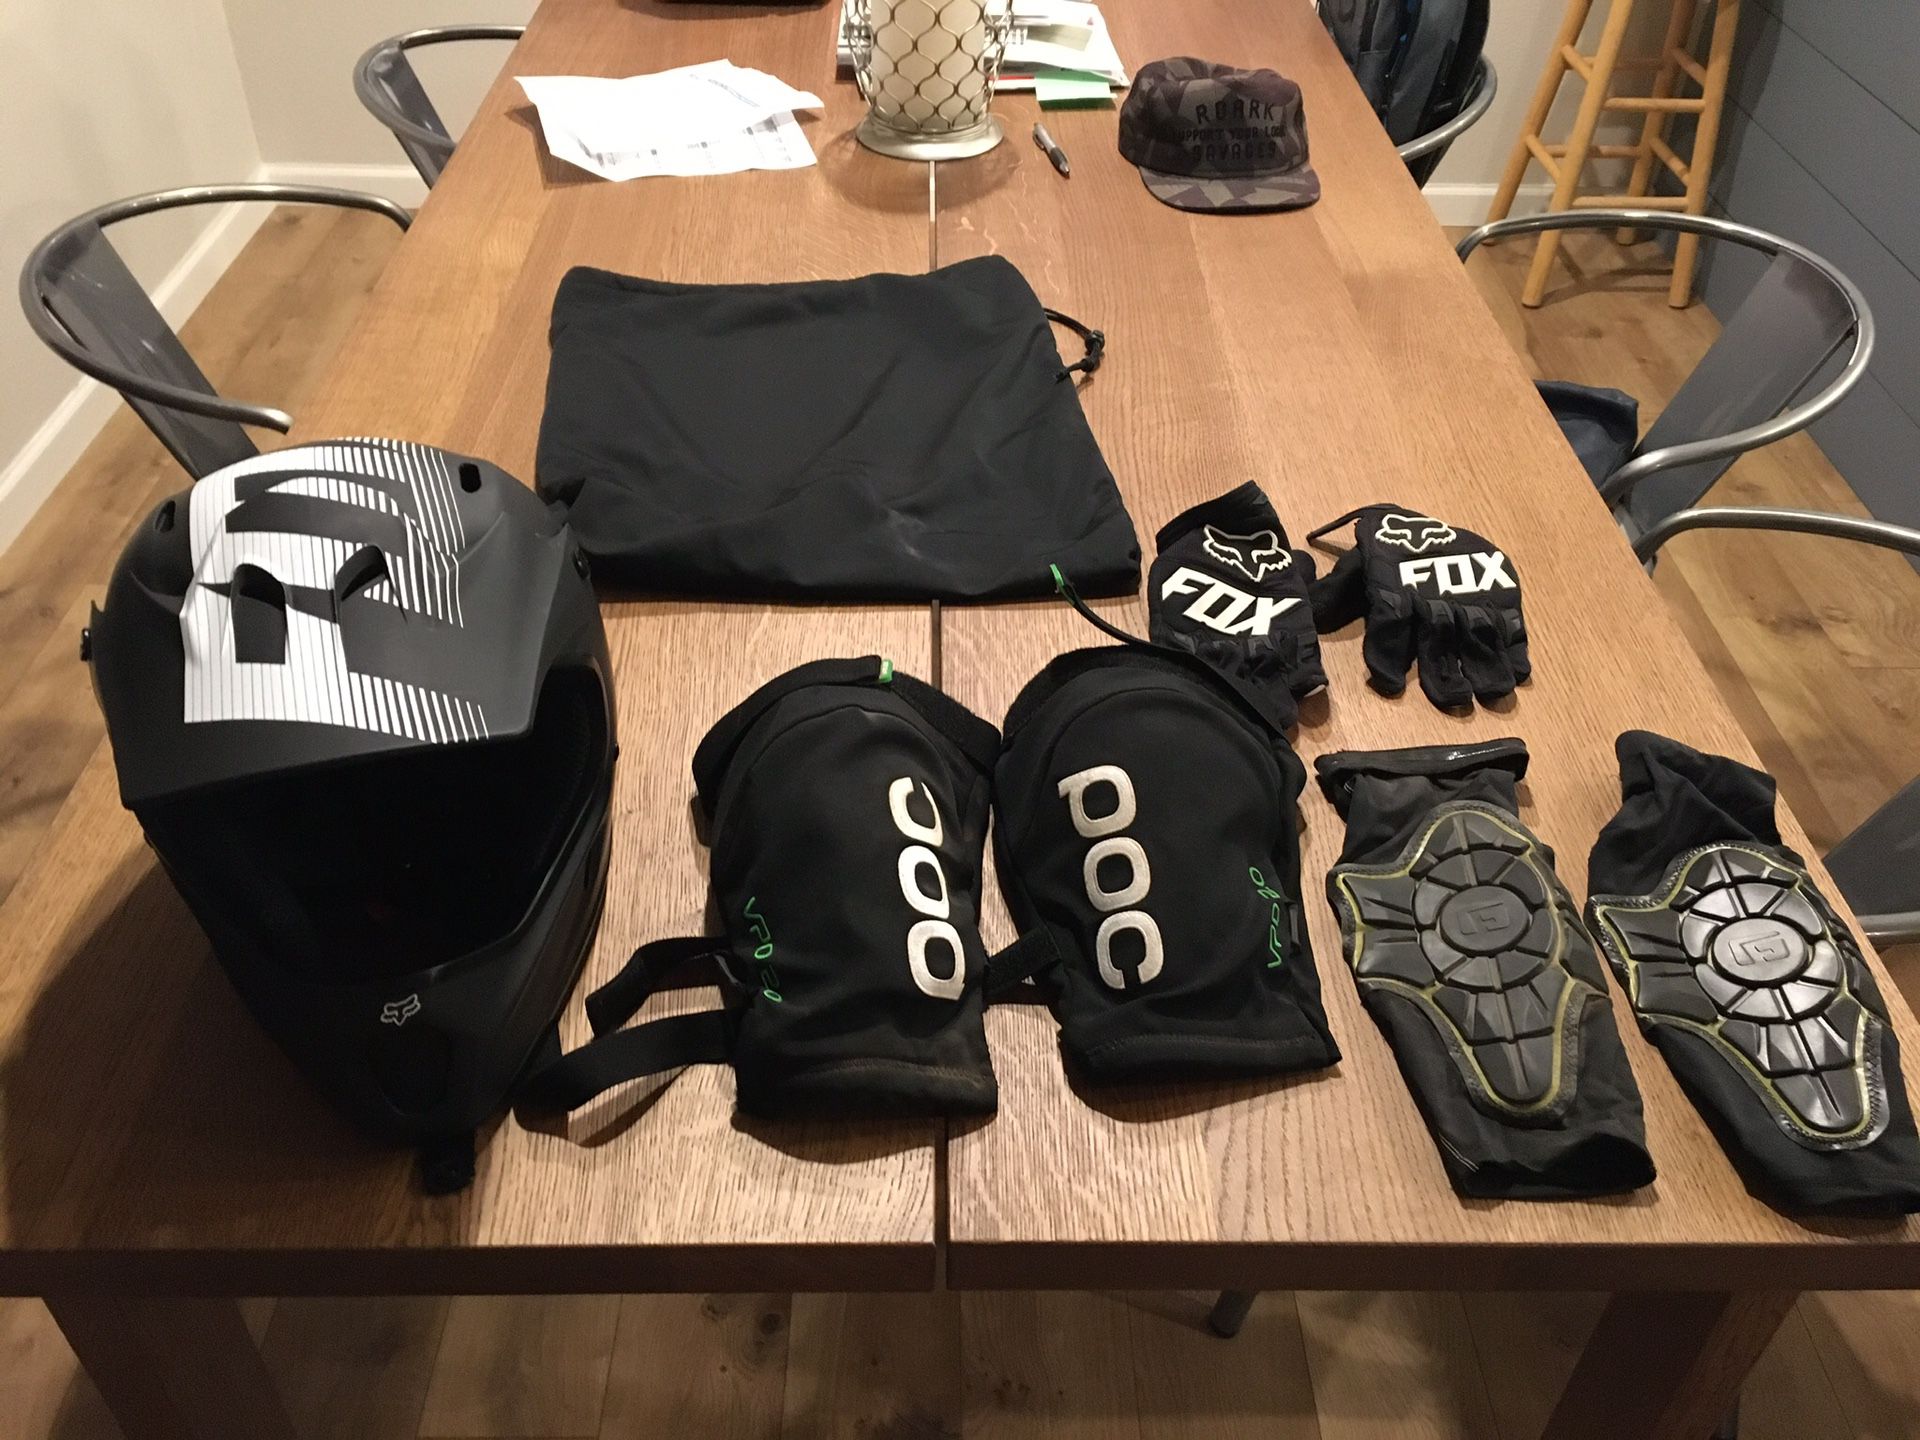 Fox mountain bike helmet and extras